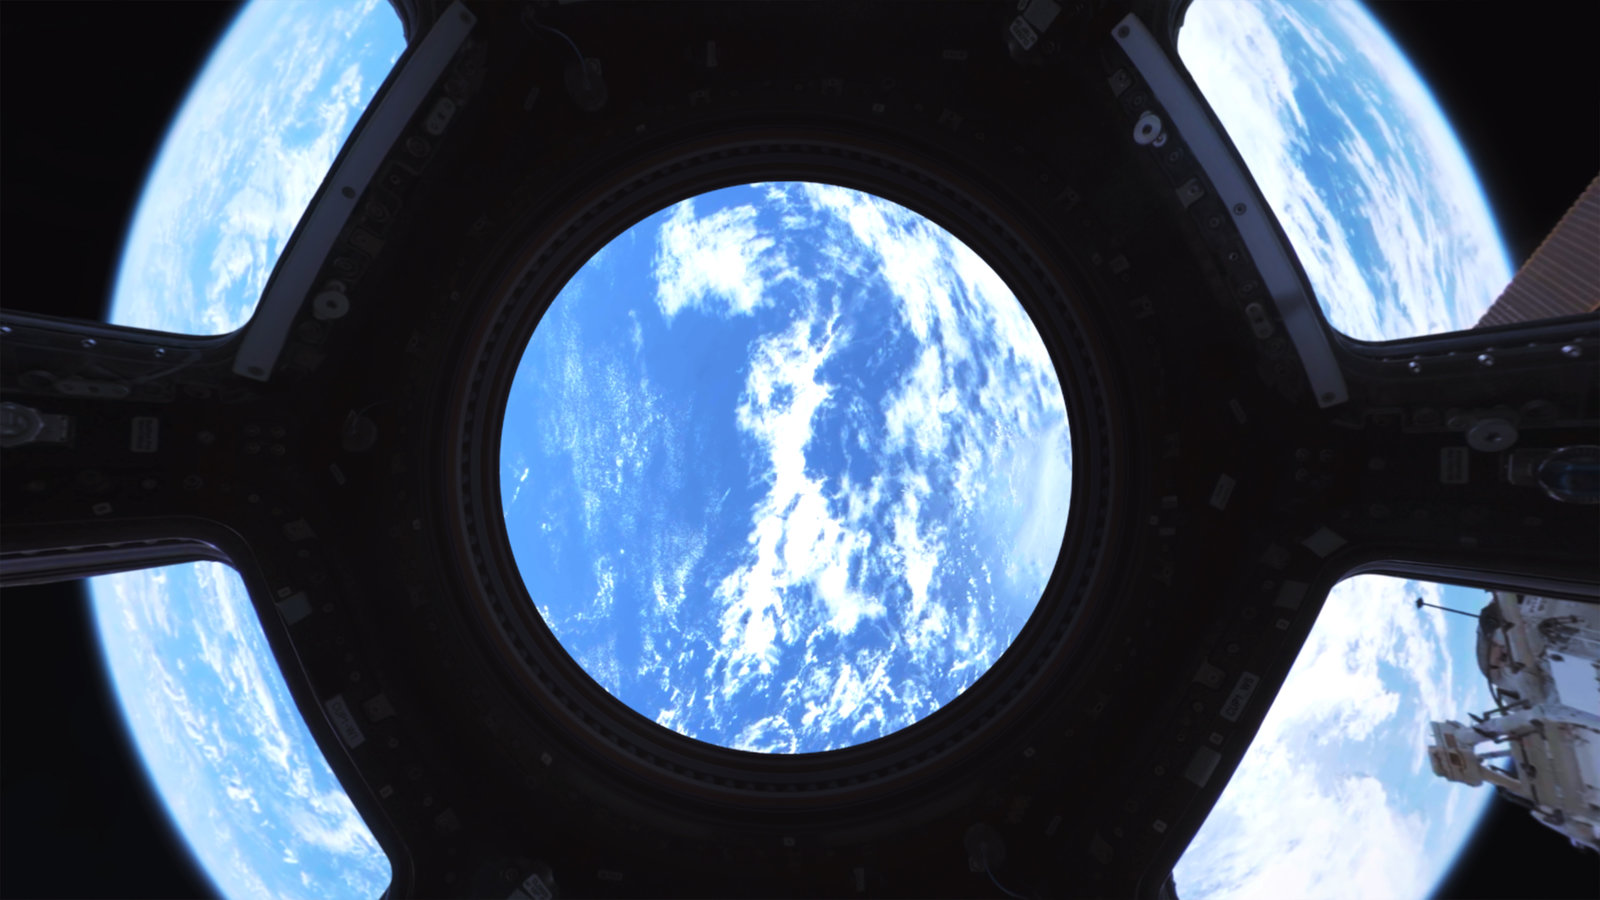 ASP_LArctique canadien vu de la Cupola, dans la  Station spatiale internationale@NASA (1).jpg